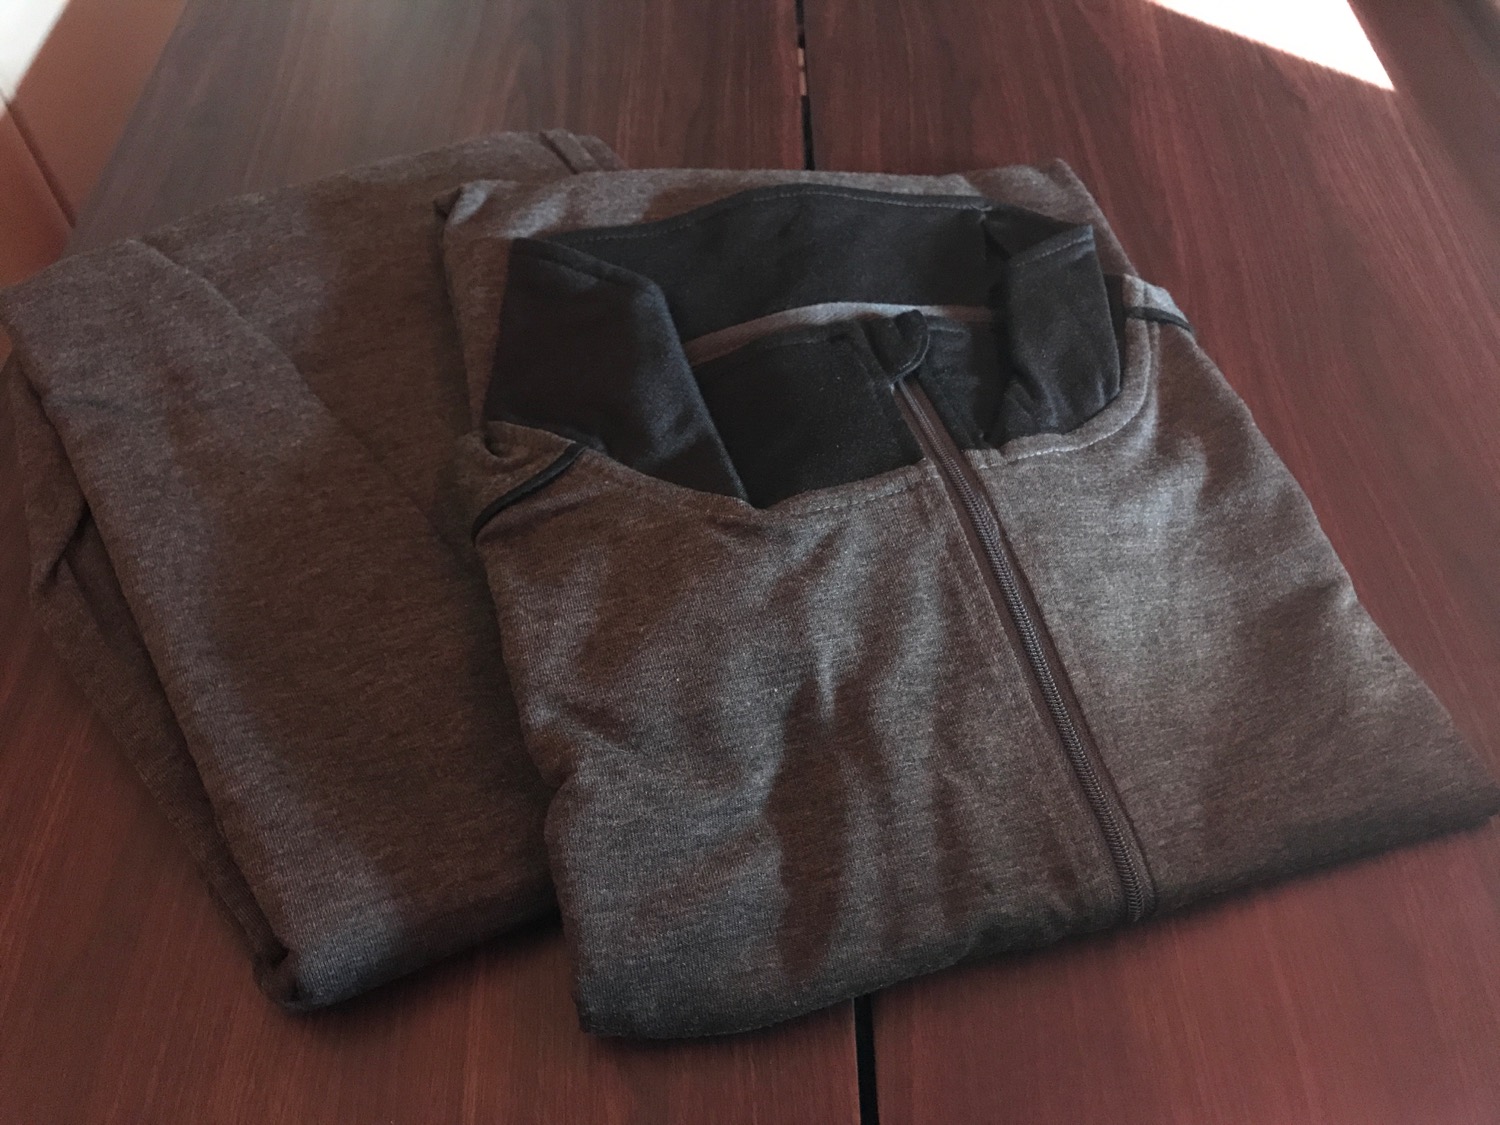 Gray sweatshirt folded on a wooden surface